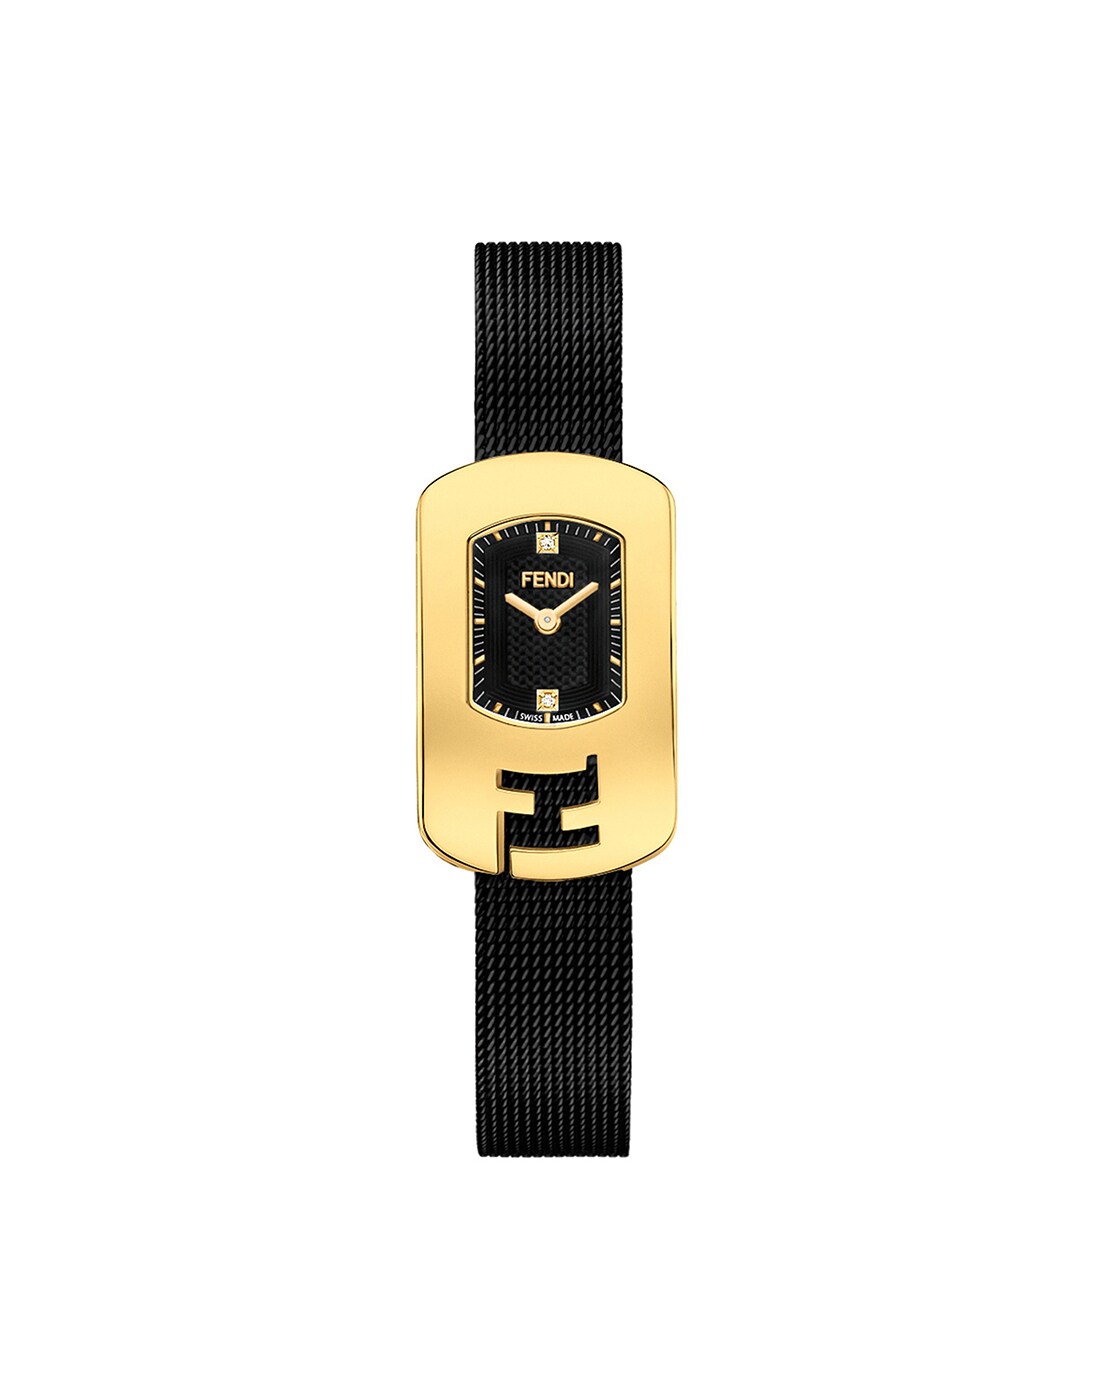 Striking Vintage Fendi Watch Gold Plated 400G Swiss Made Watch - Ruby Lane